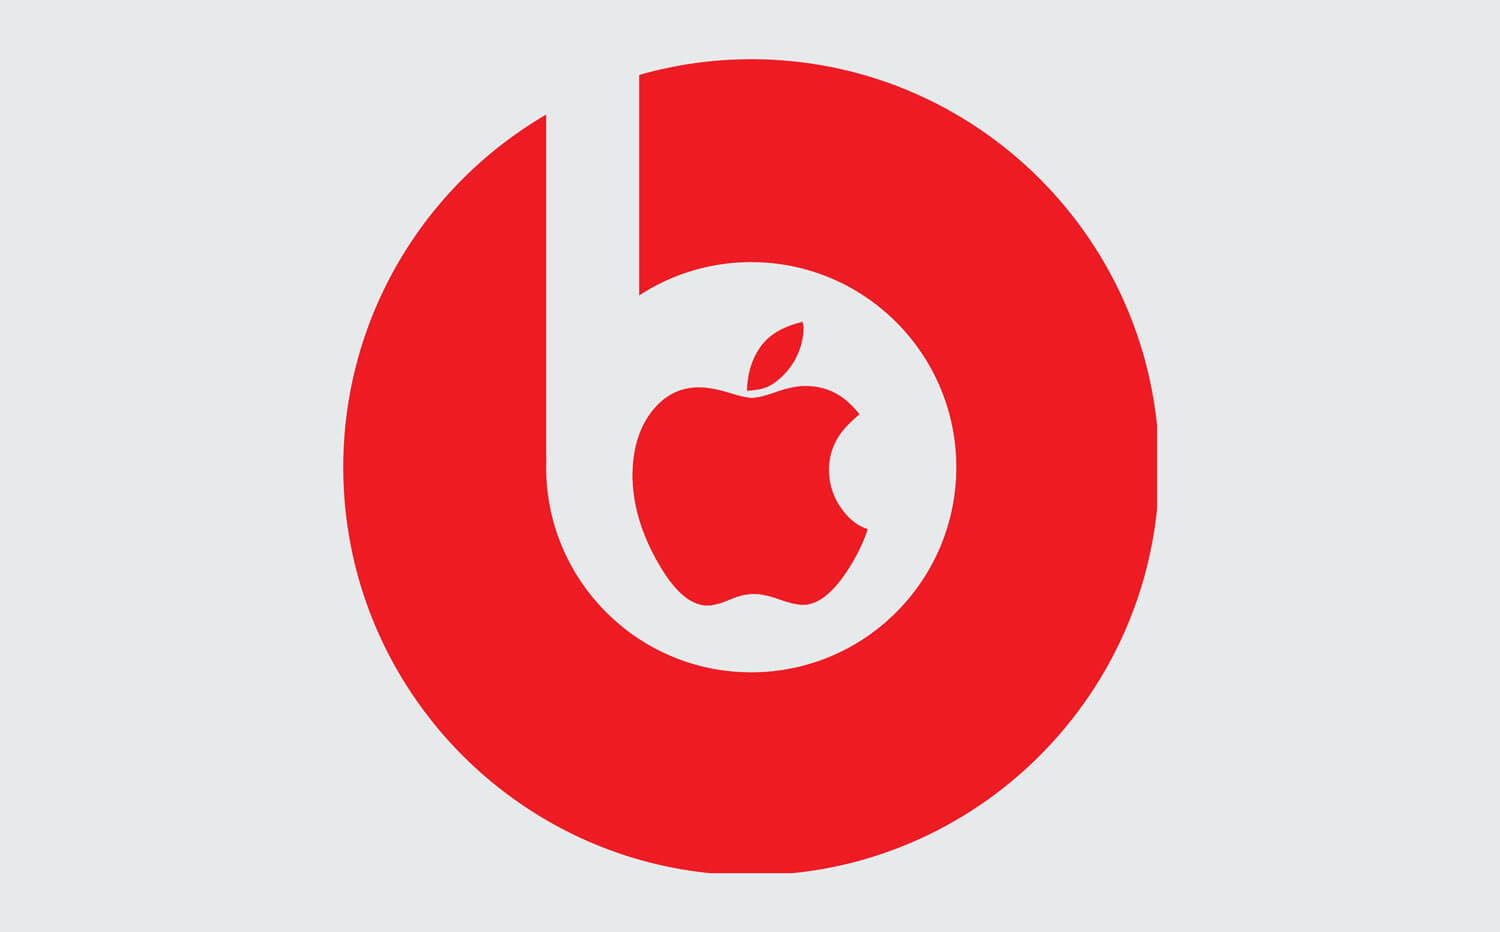 apple purchase of beats